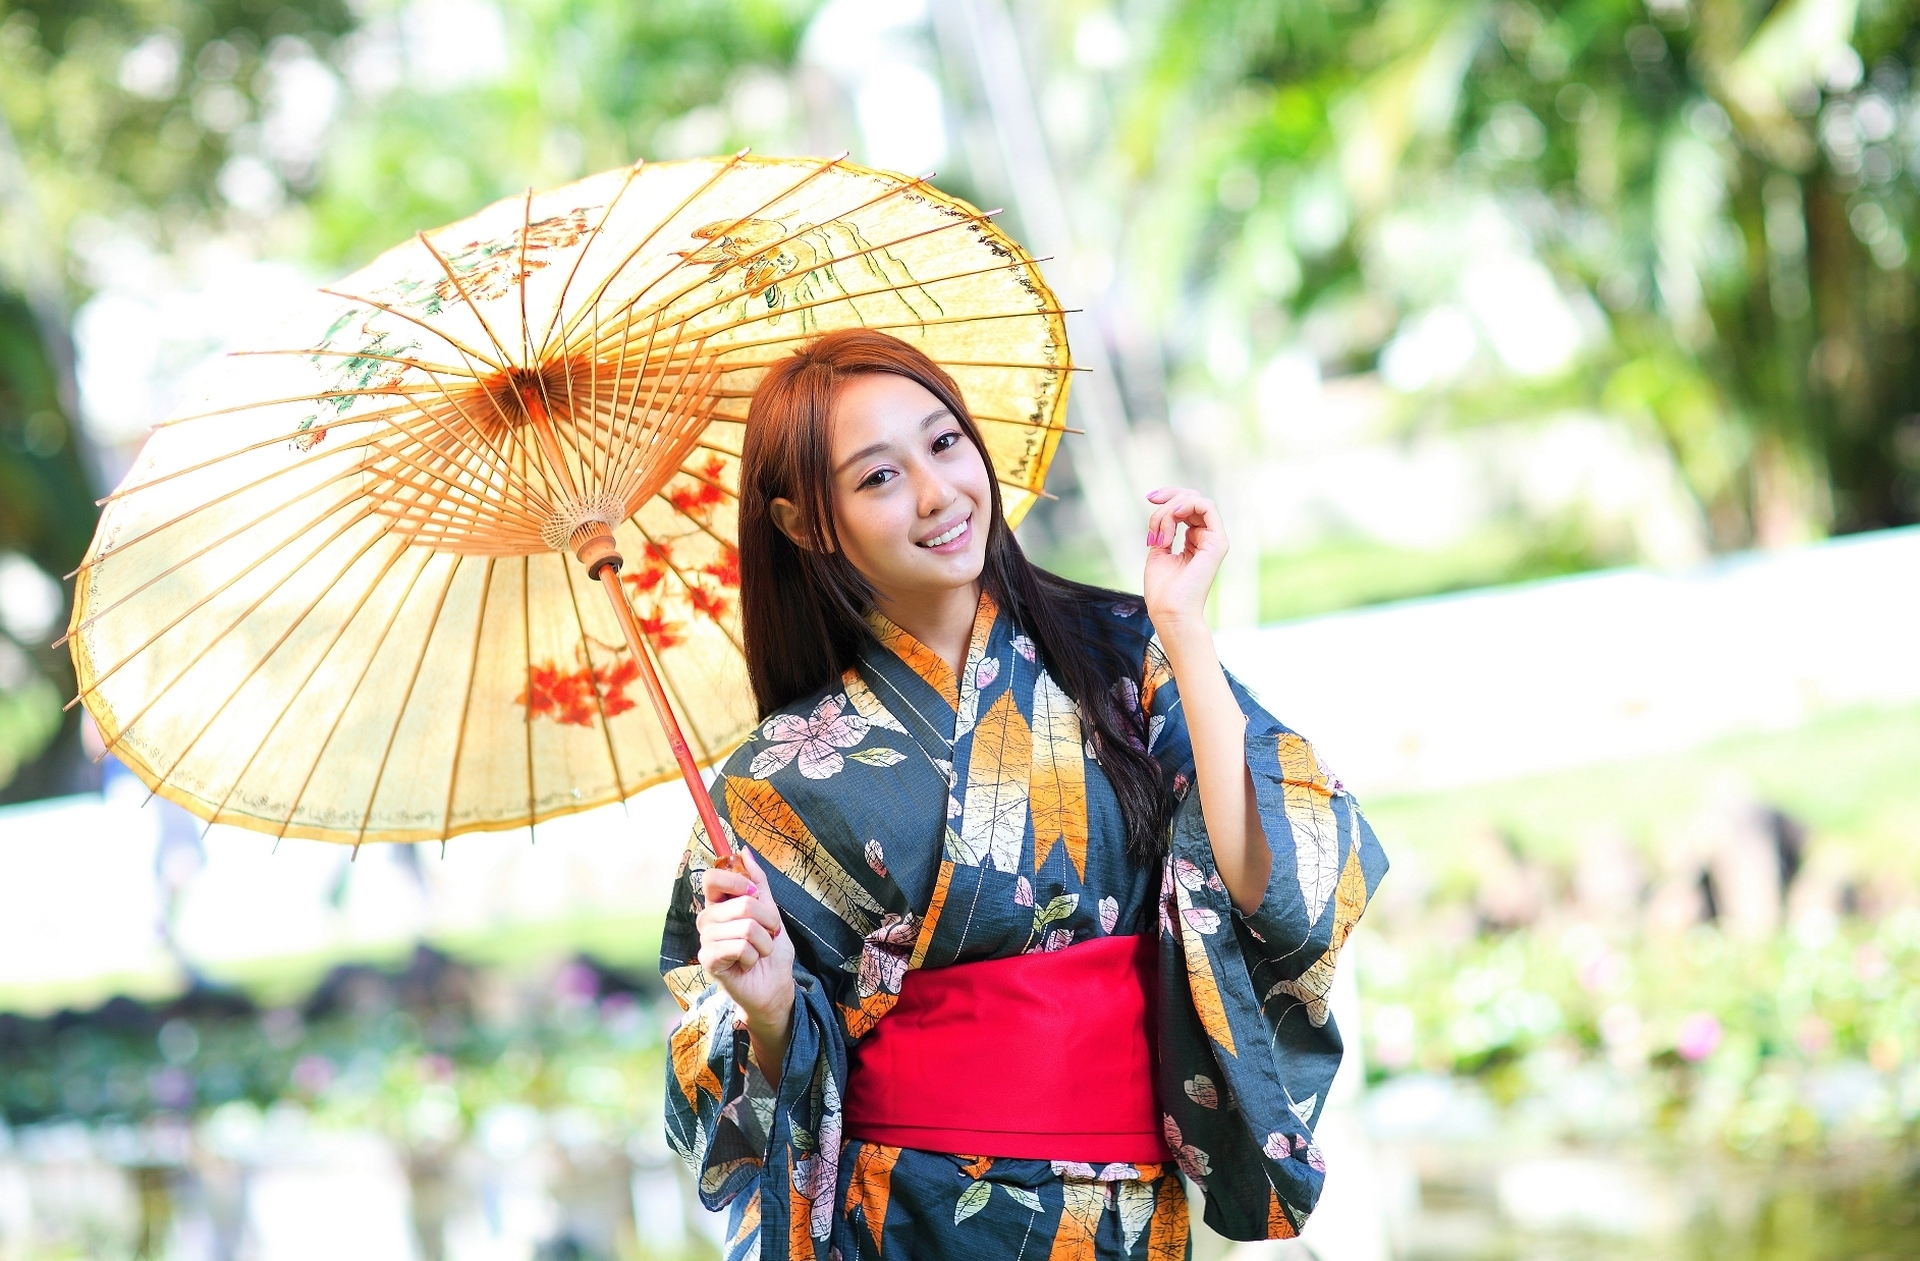 Картинка: Девушка, азиатка, кимоно, зонтик, улыбка